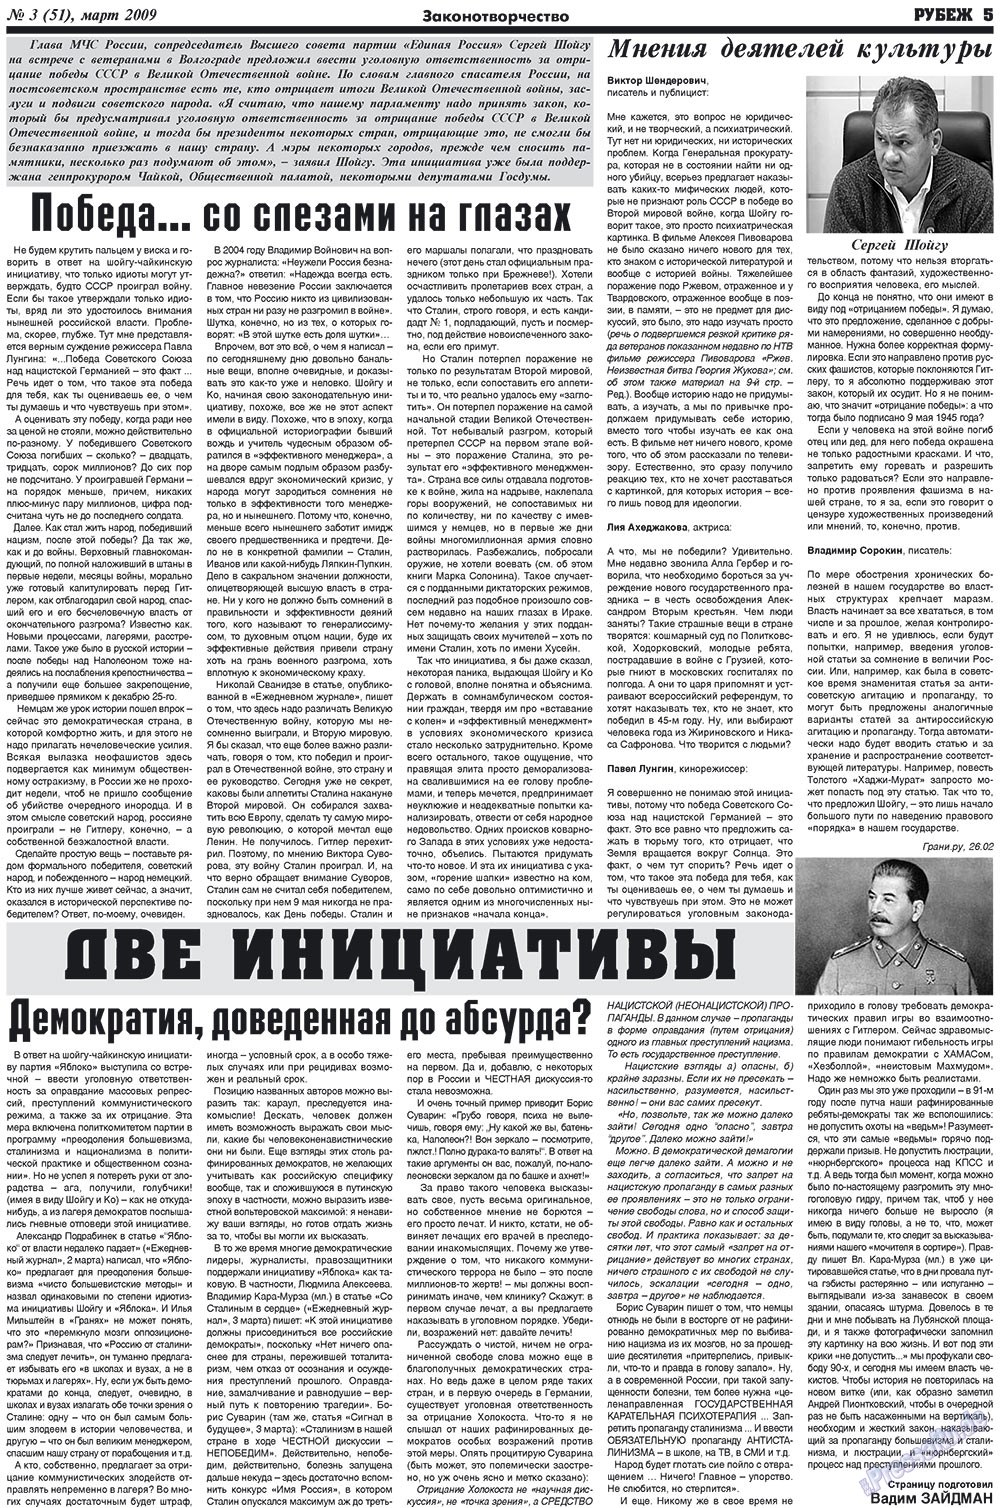 Рубеж, газета. 2009 №3 стр.5